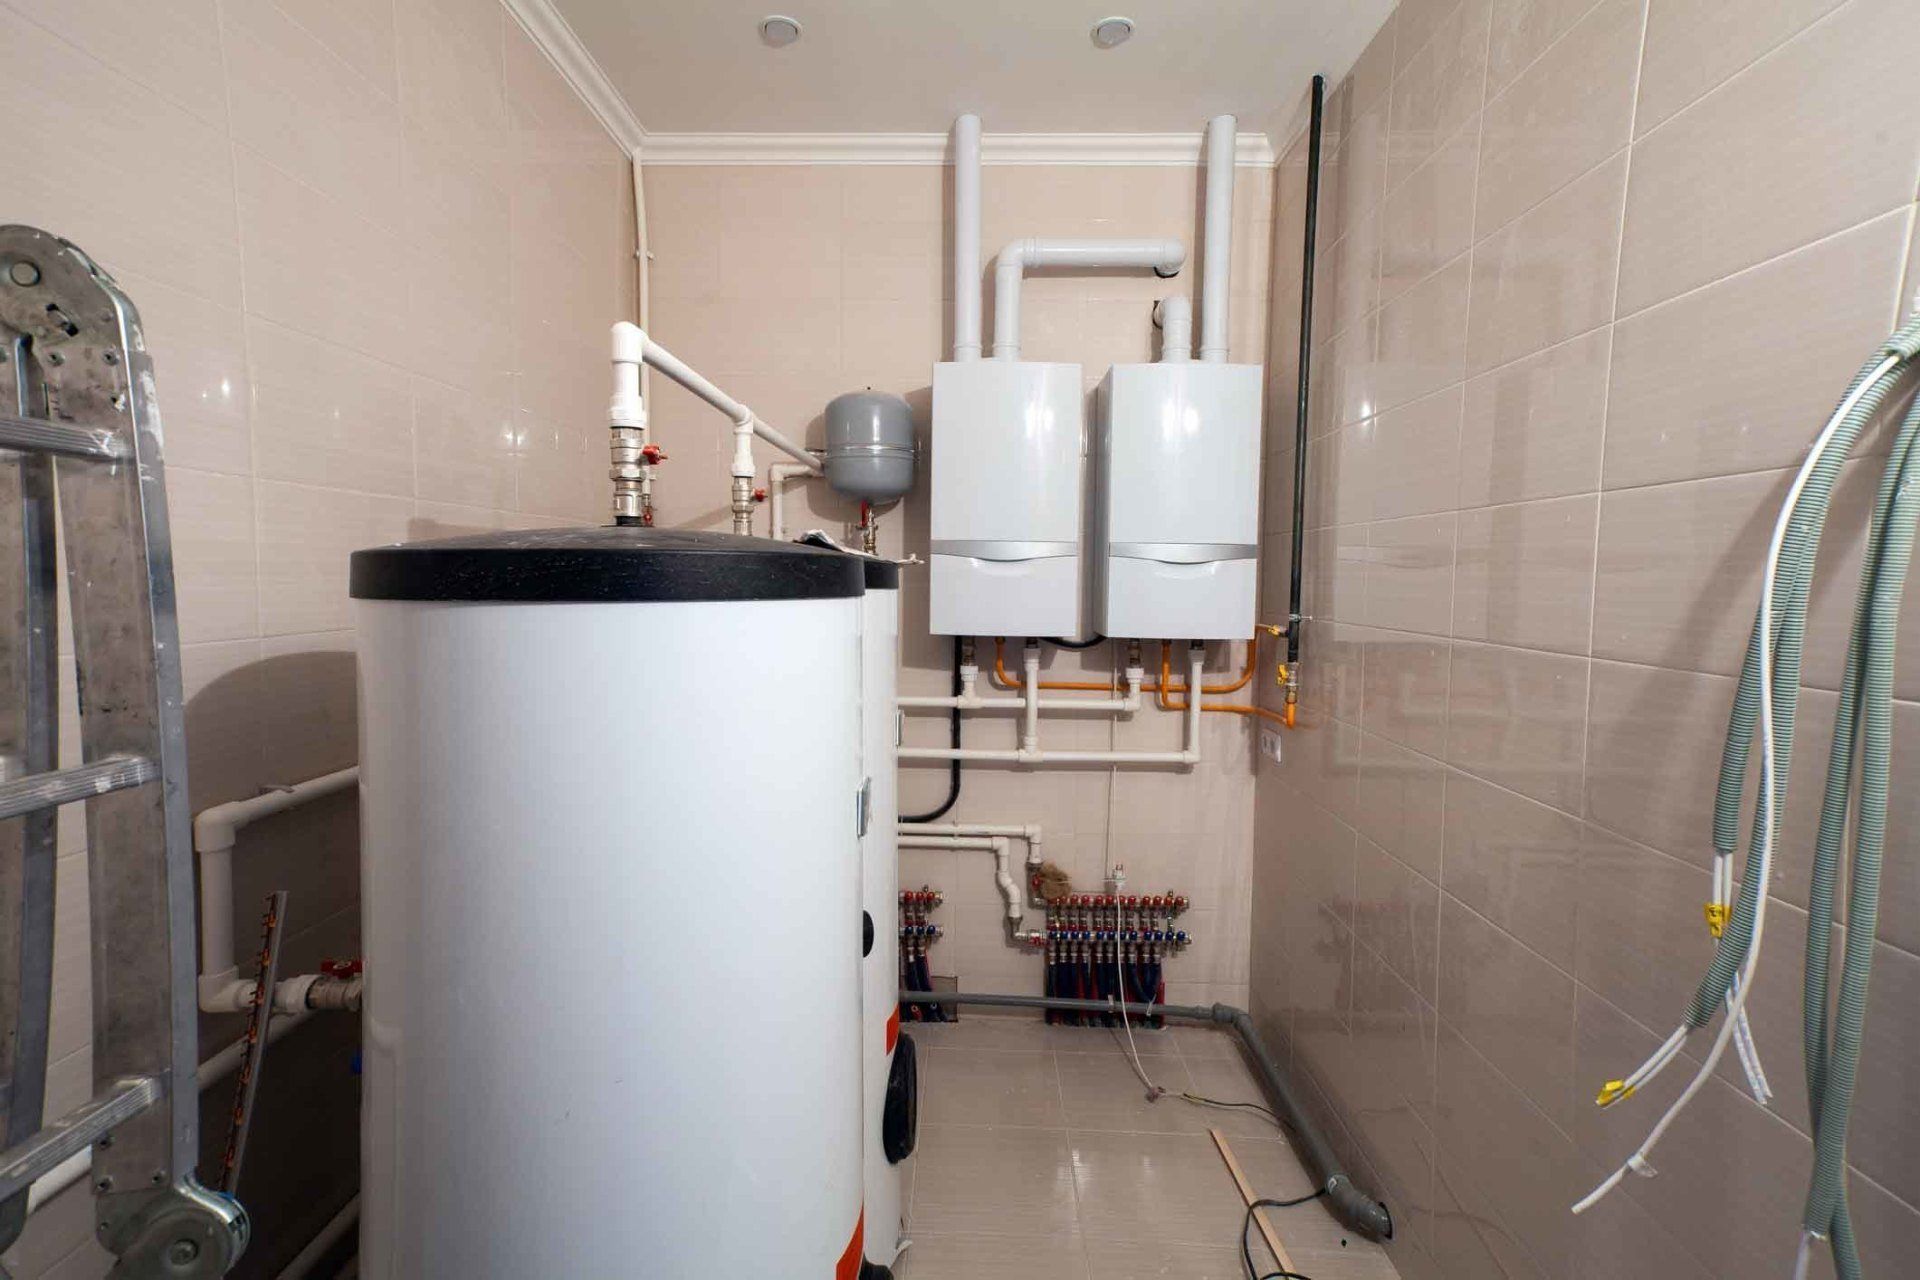 Hot water Heater and Furnace in Basement — Santa Rosa, CA — Action Plumbing & Heating Maintenance